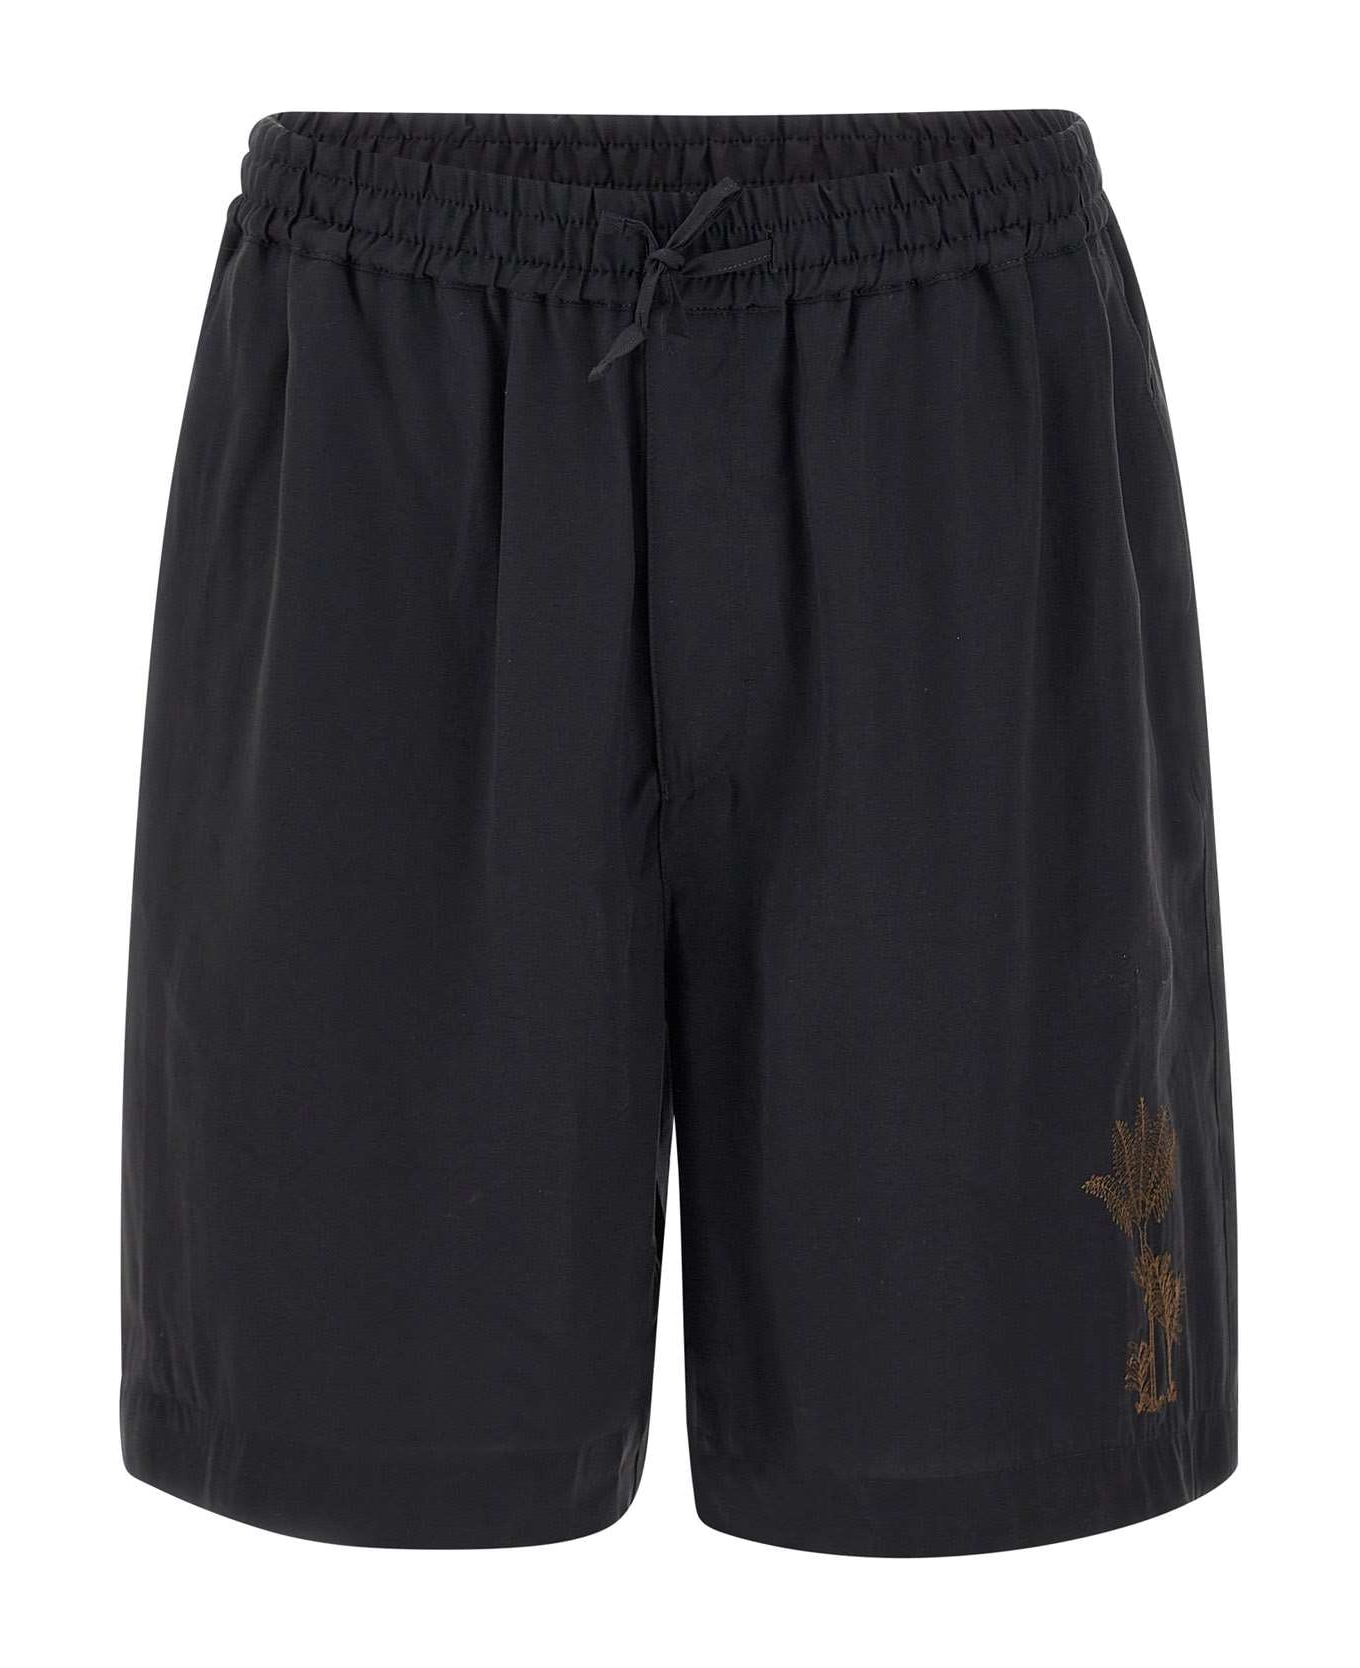 Emporio Armani Modal Shorts - BLACK